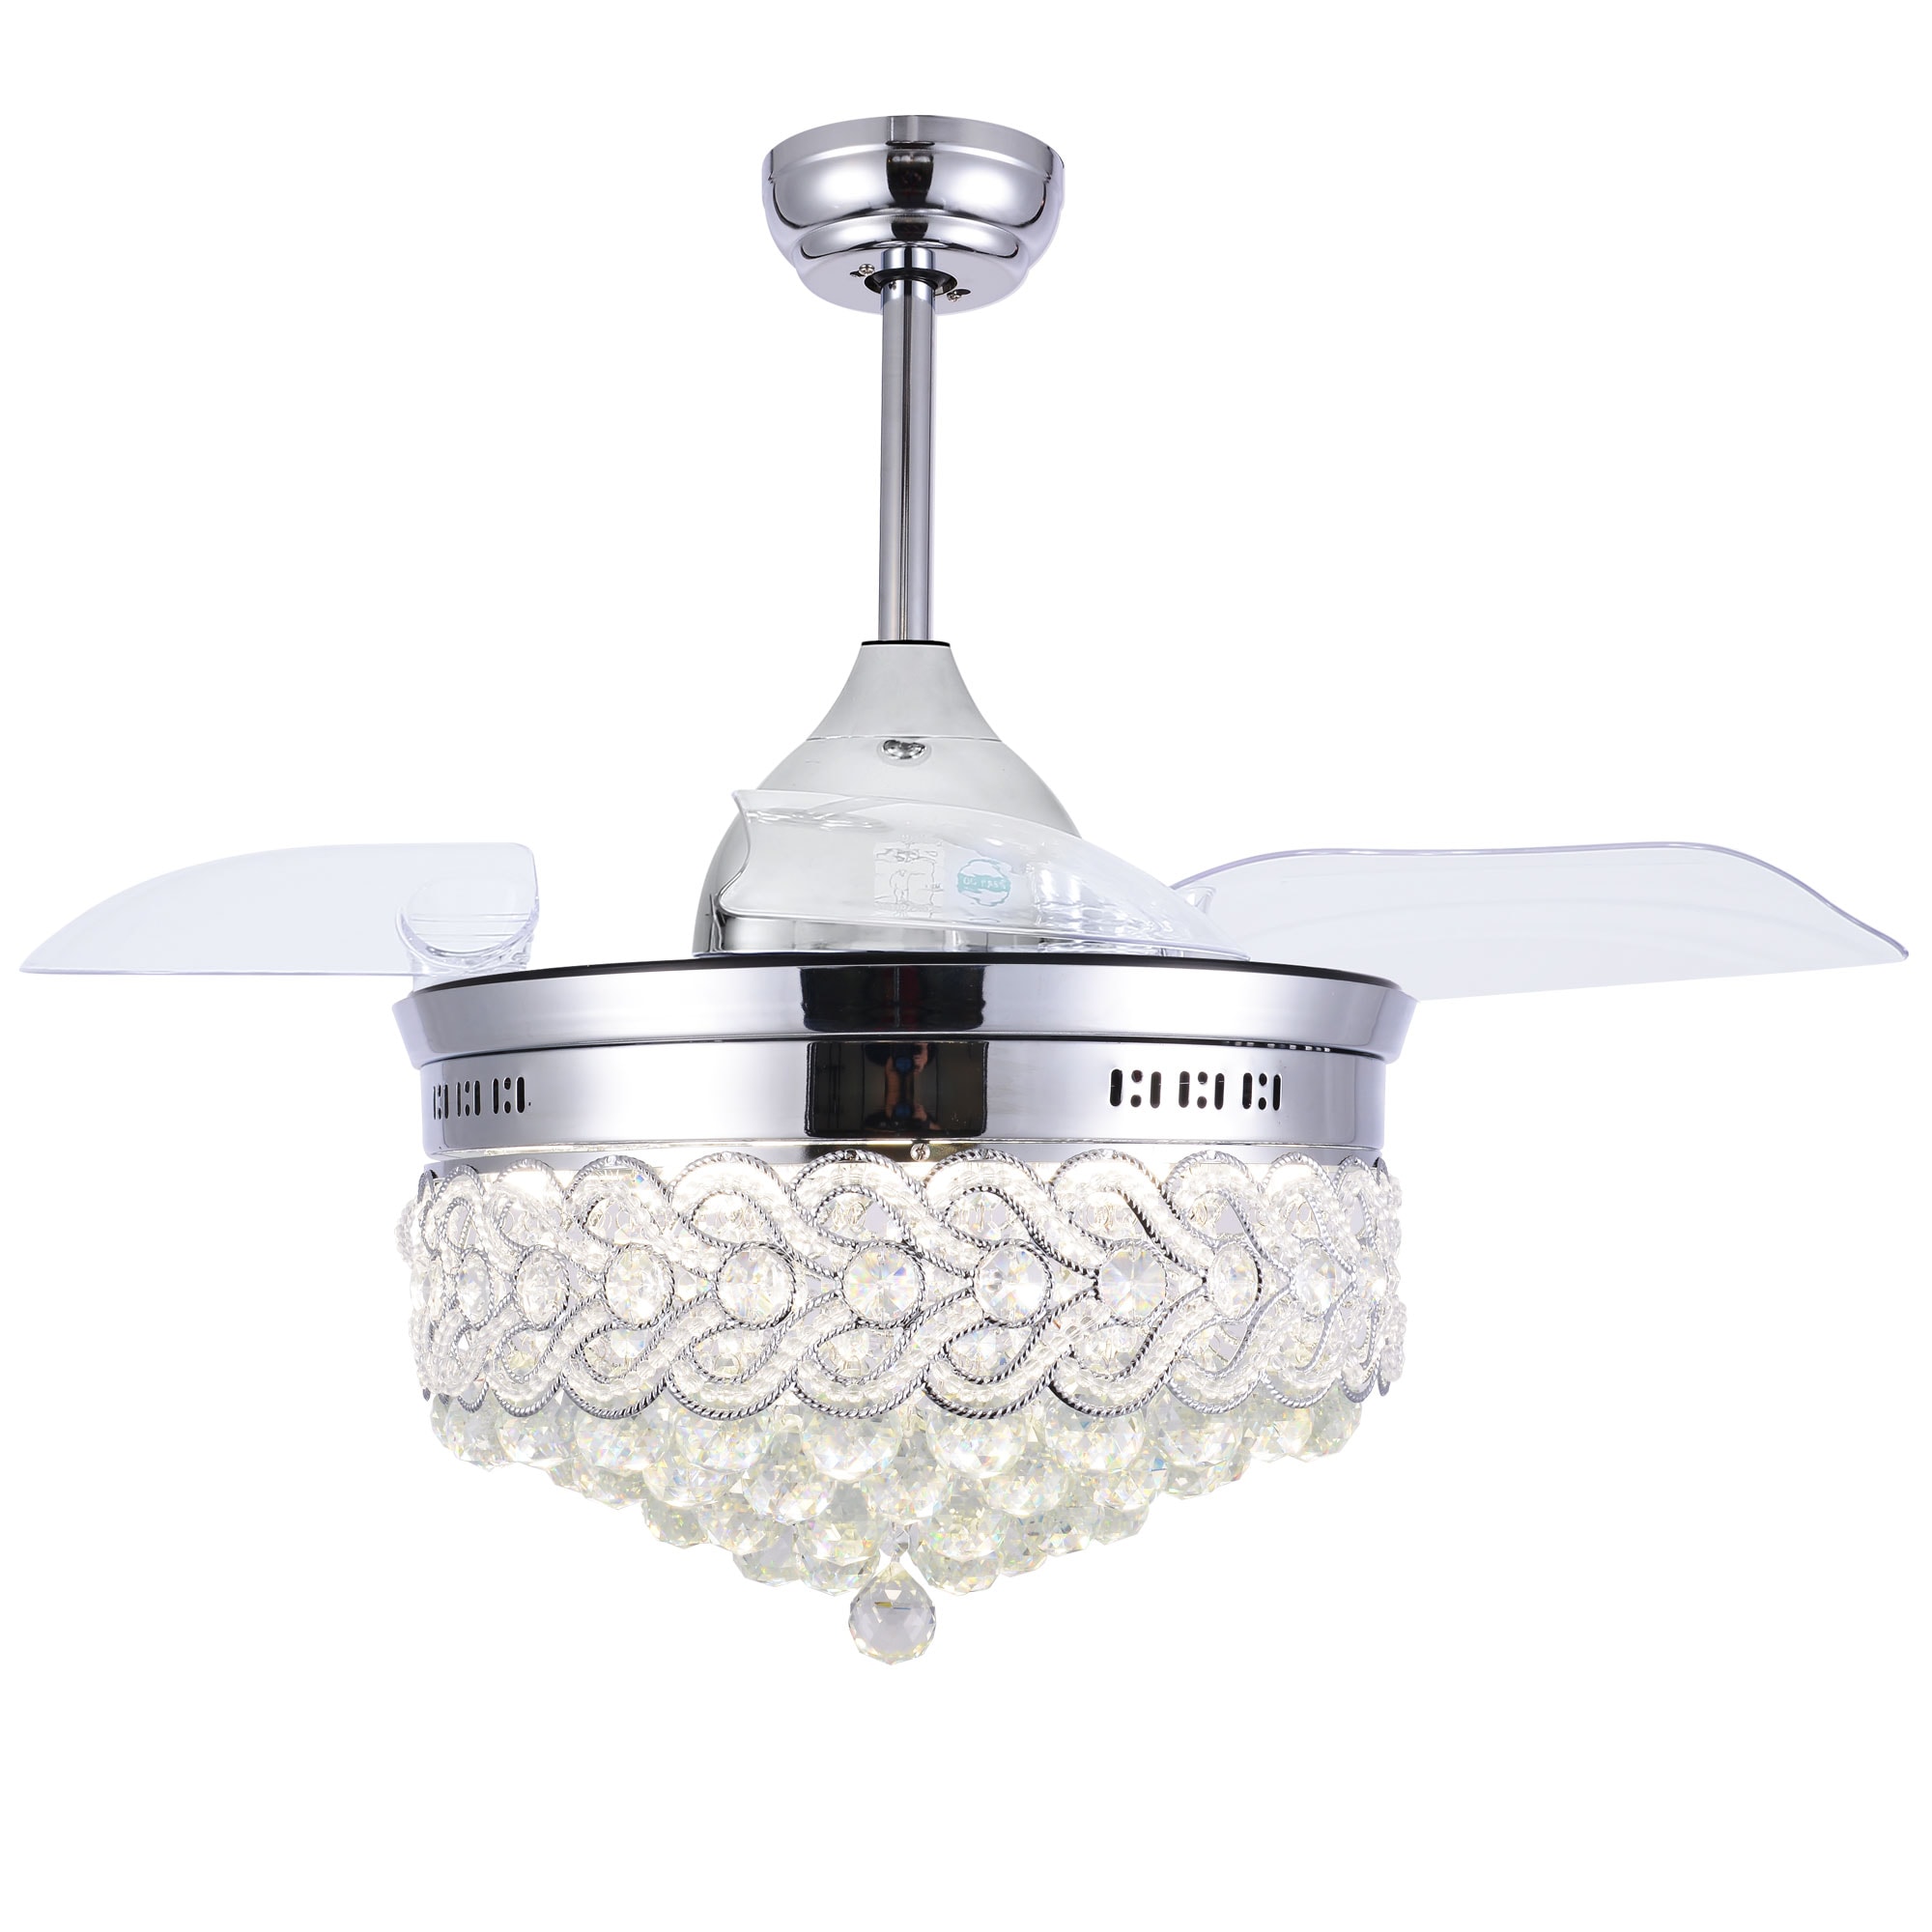 42" Retractable LED 3-Color Change Ceiling Fan Light Crystal Chandelier w/remote 